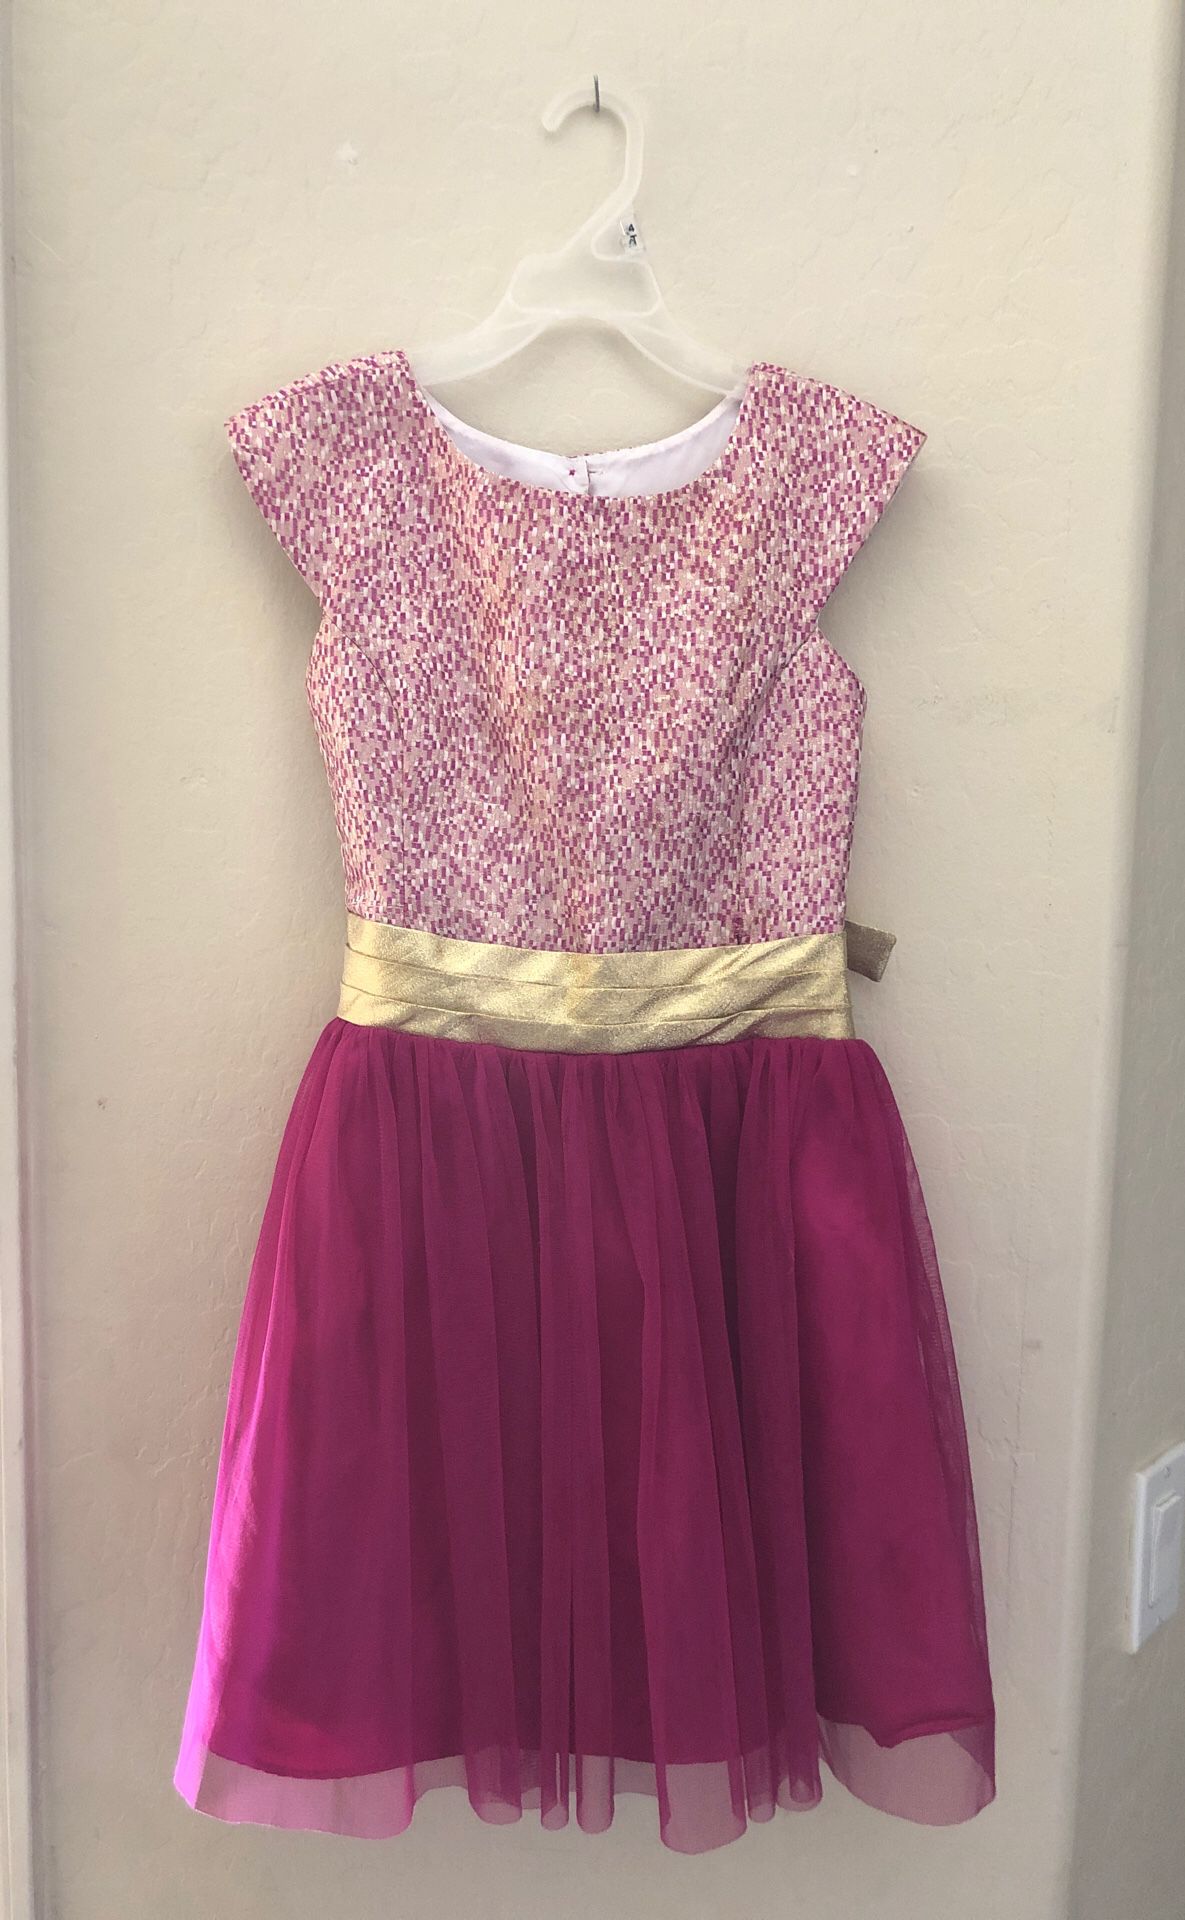 Girls Jona Michelle Easter Spring dress in size 7 pink chiffon